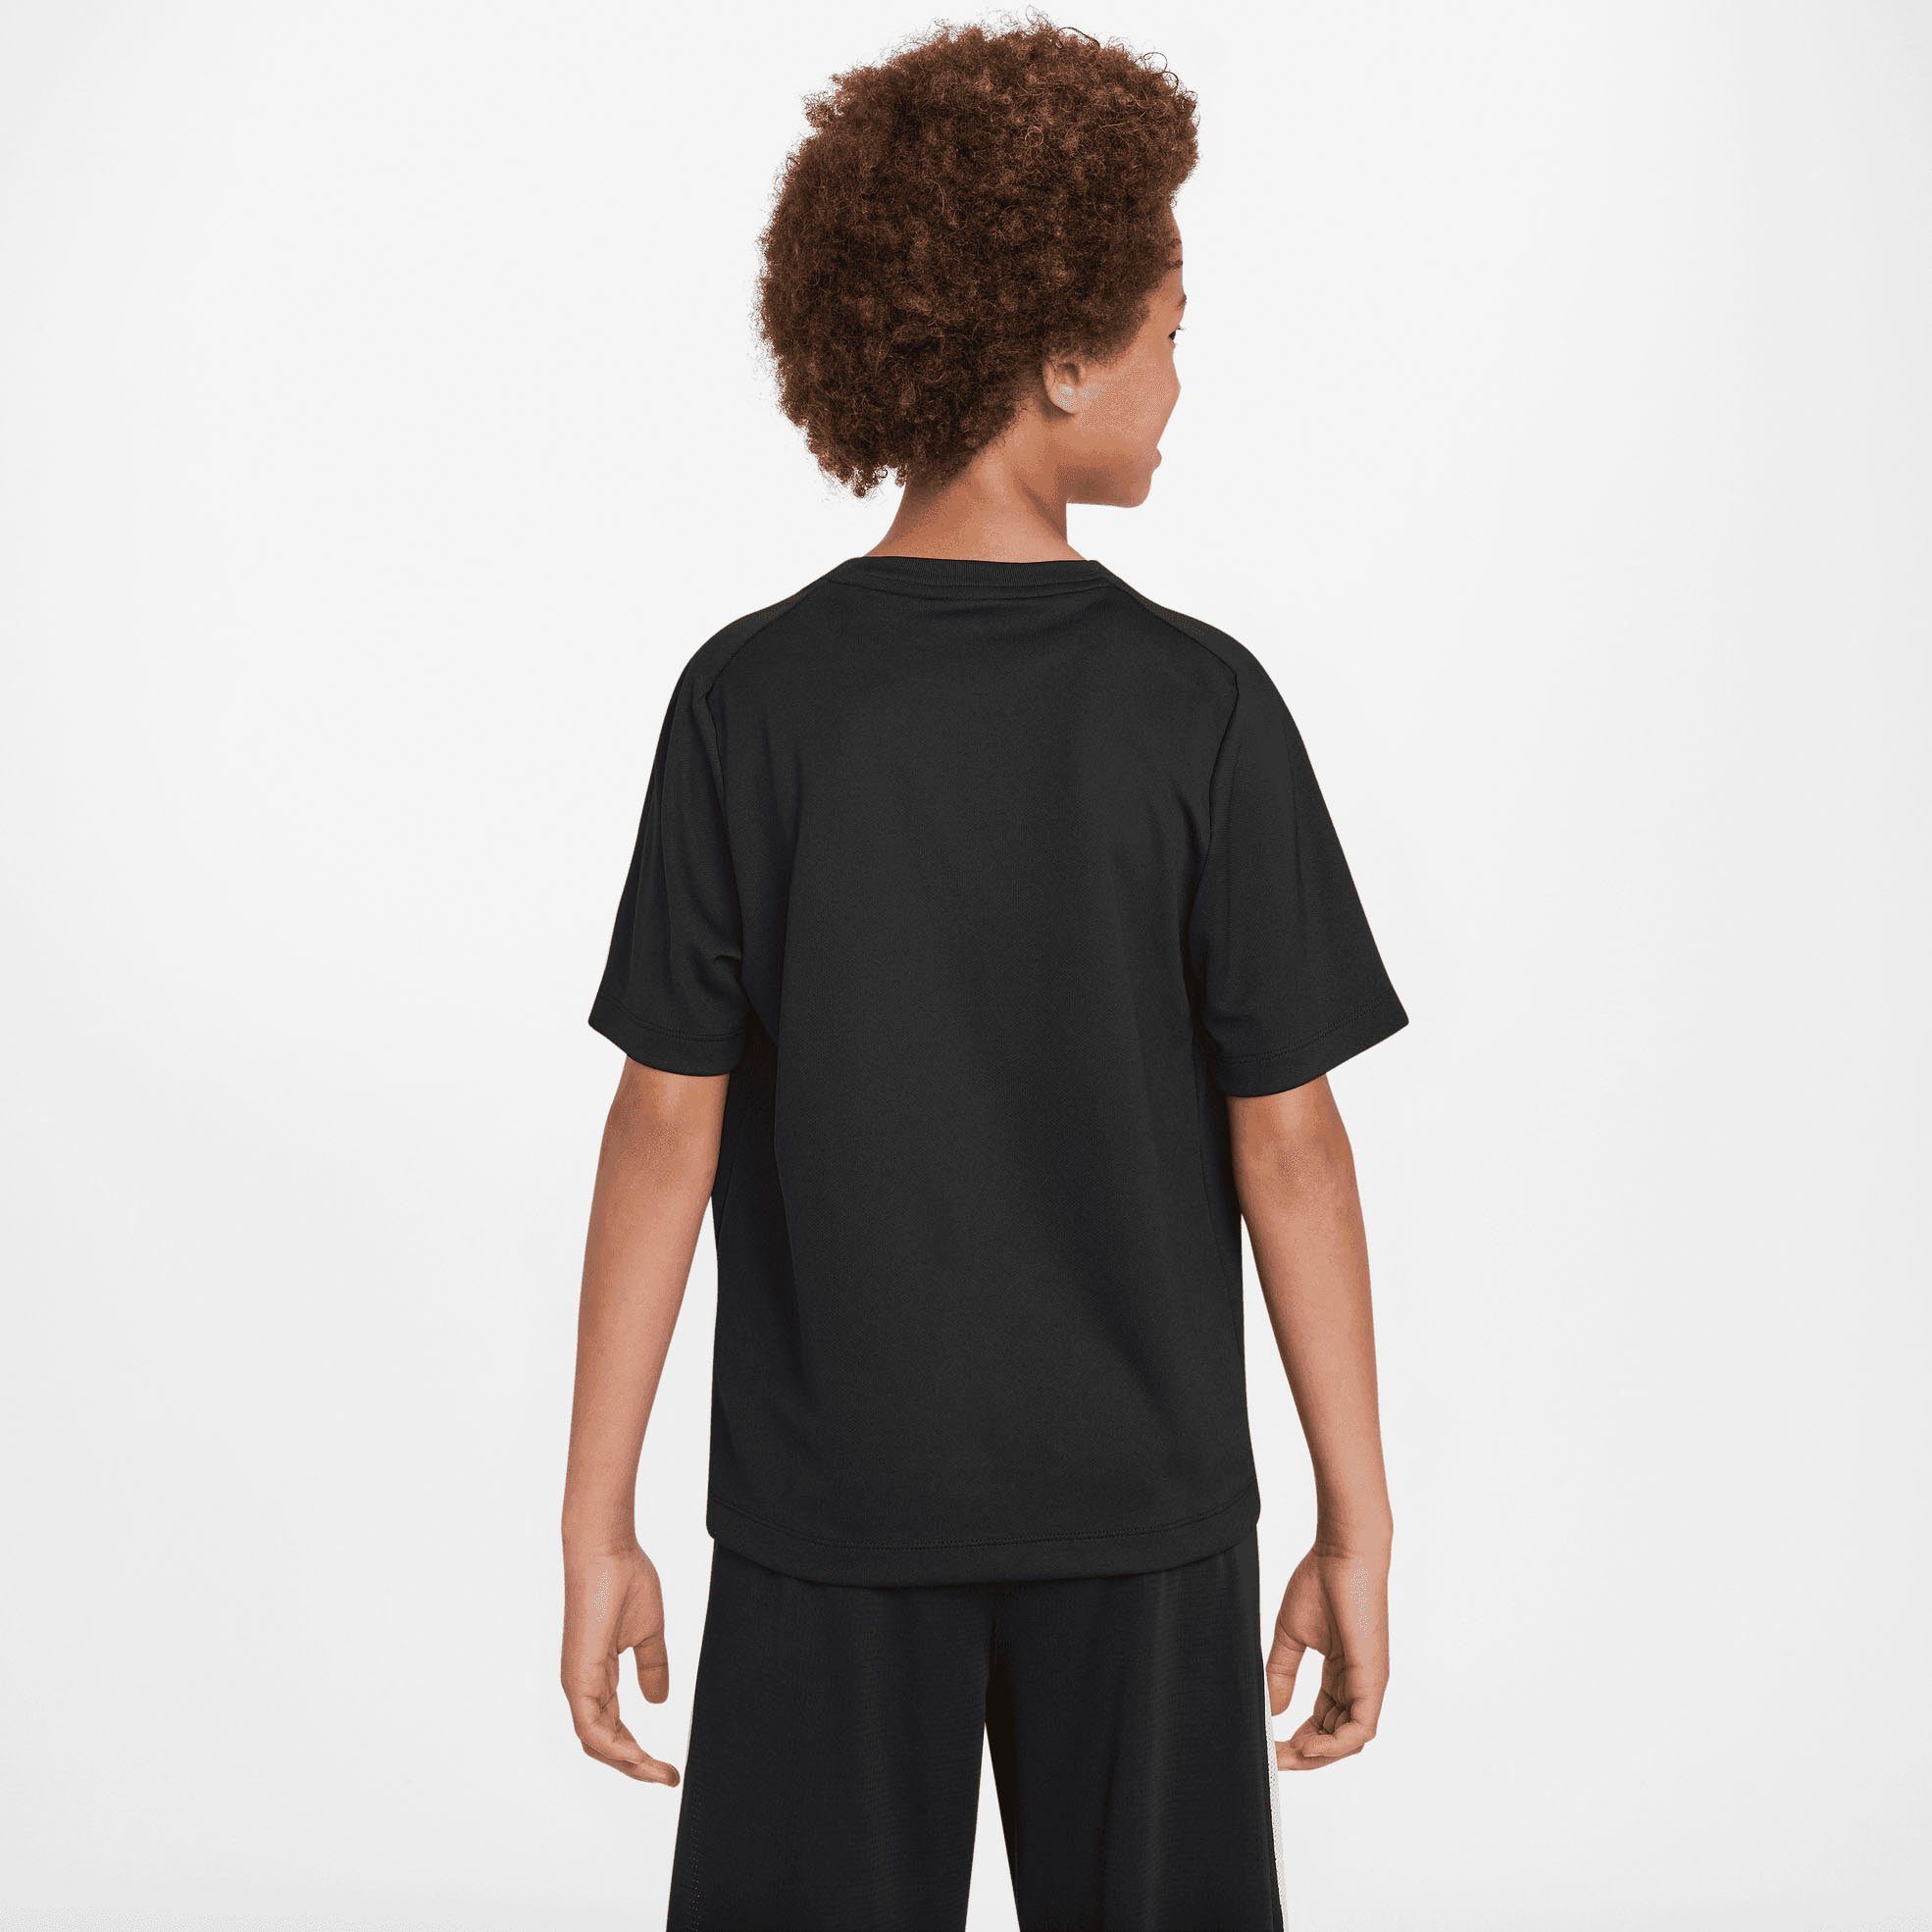 (BOYS) TOP TRAINING KIDS' BLACK/WHITE Trainingsshirt GRAPHIC Nike MULTI+ BIG DRI-FIT